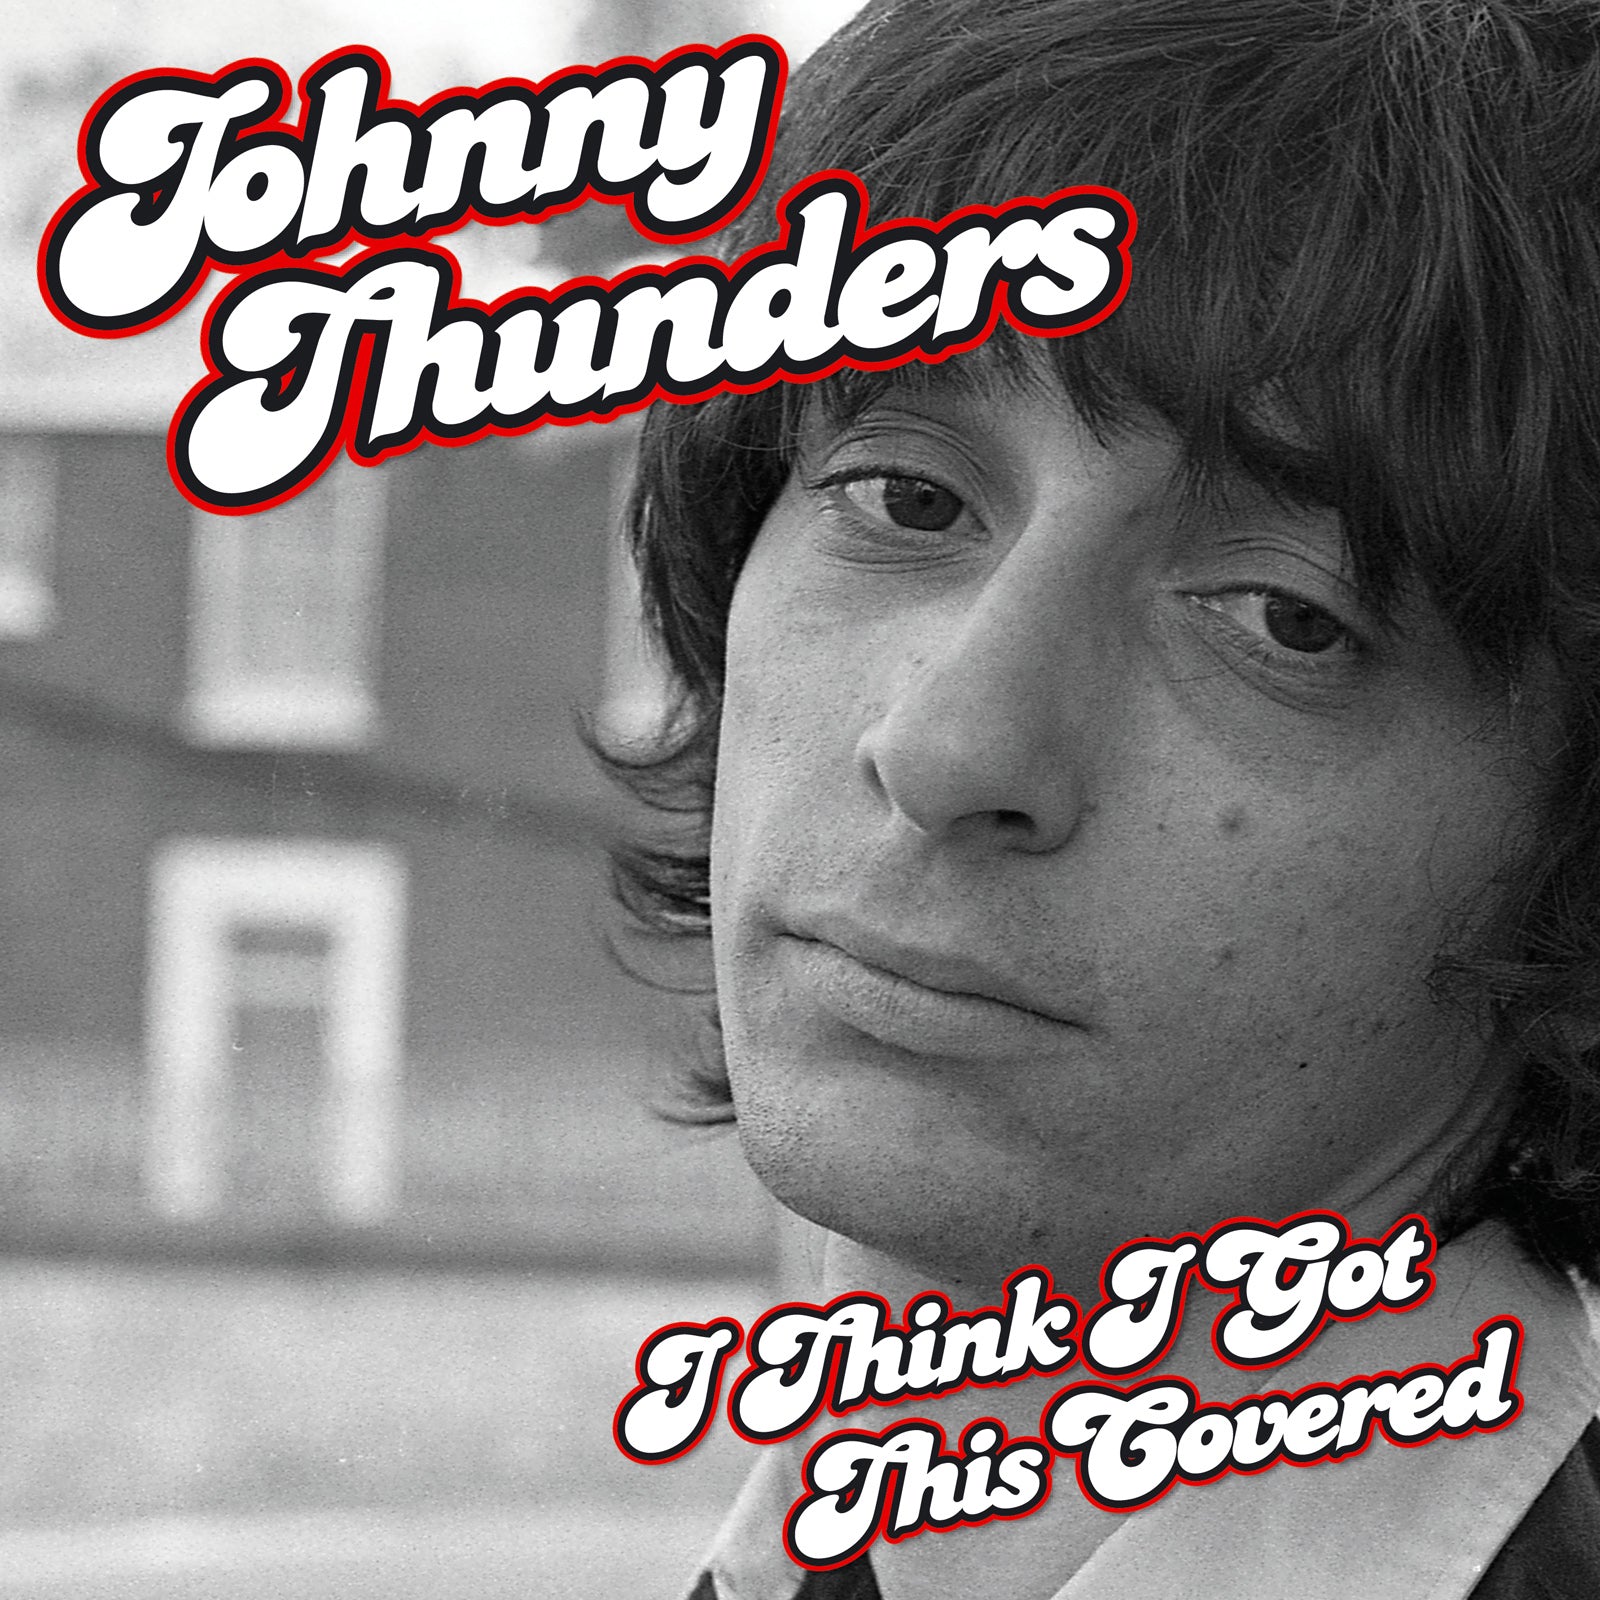 Johnny Thunders - I Think I've Got This Covered - CD Album & Vinyl LP - Secret Records Limited